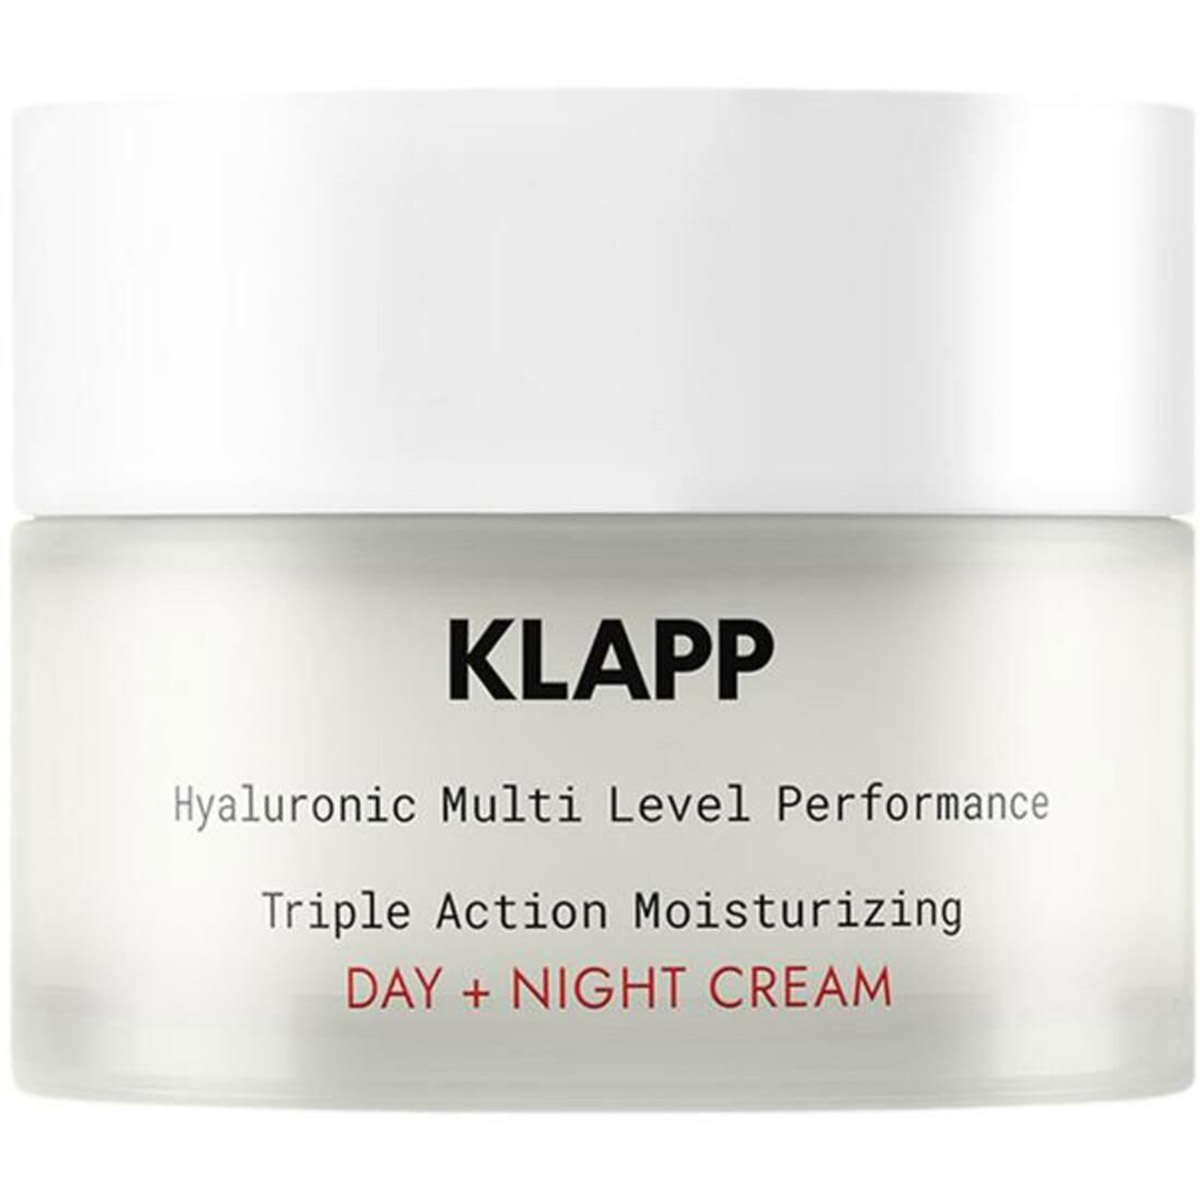 Увлажняющий крем Klapp Balance Triple Action Moisturizing Day + Night Cream 50 мл - фото 1